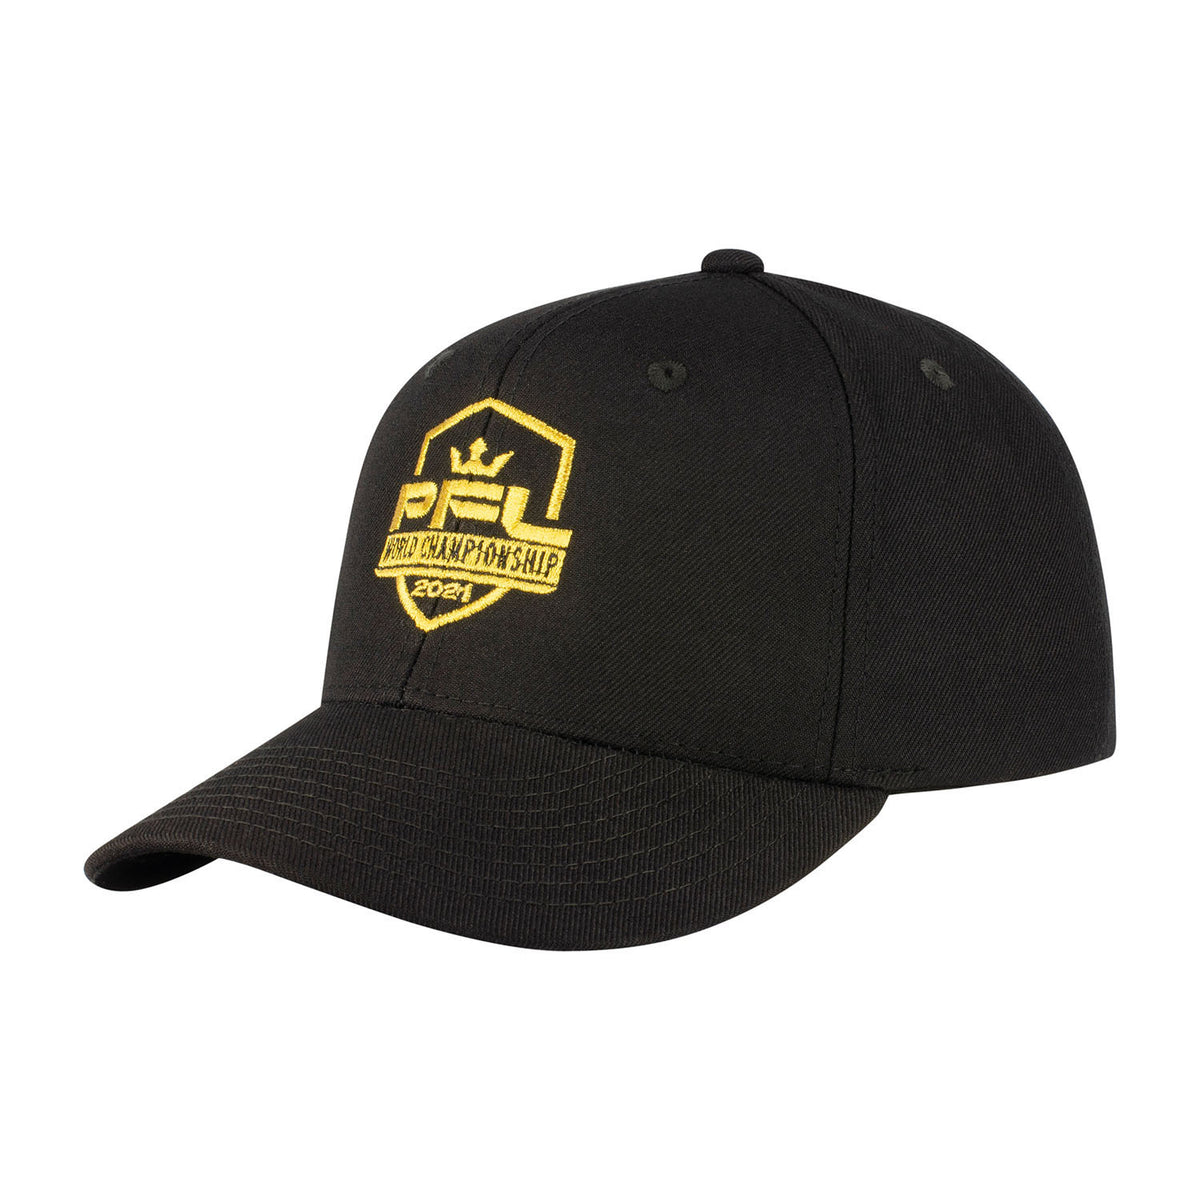 2021 PFL Championship Shield Hat in Black - Left Side View